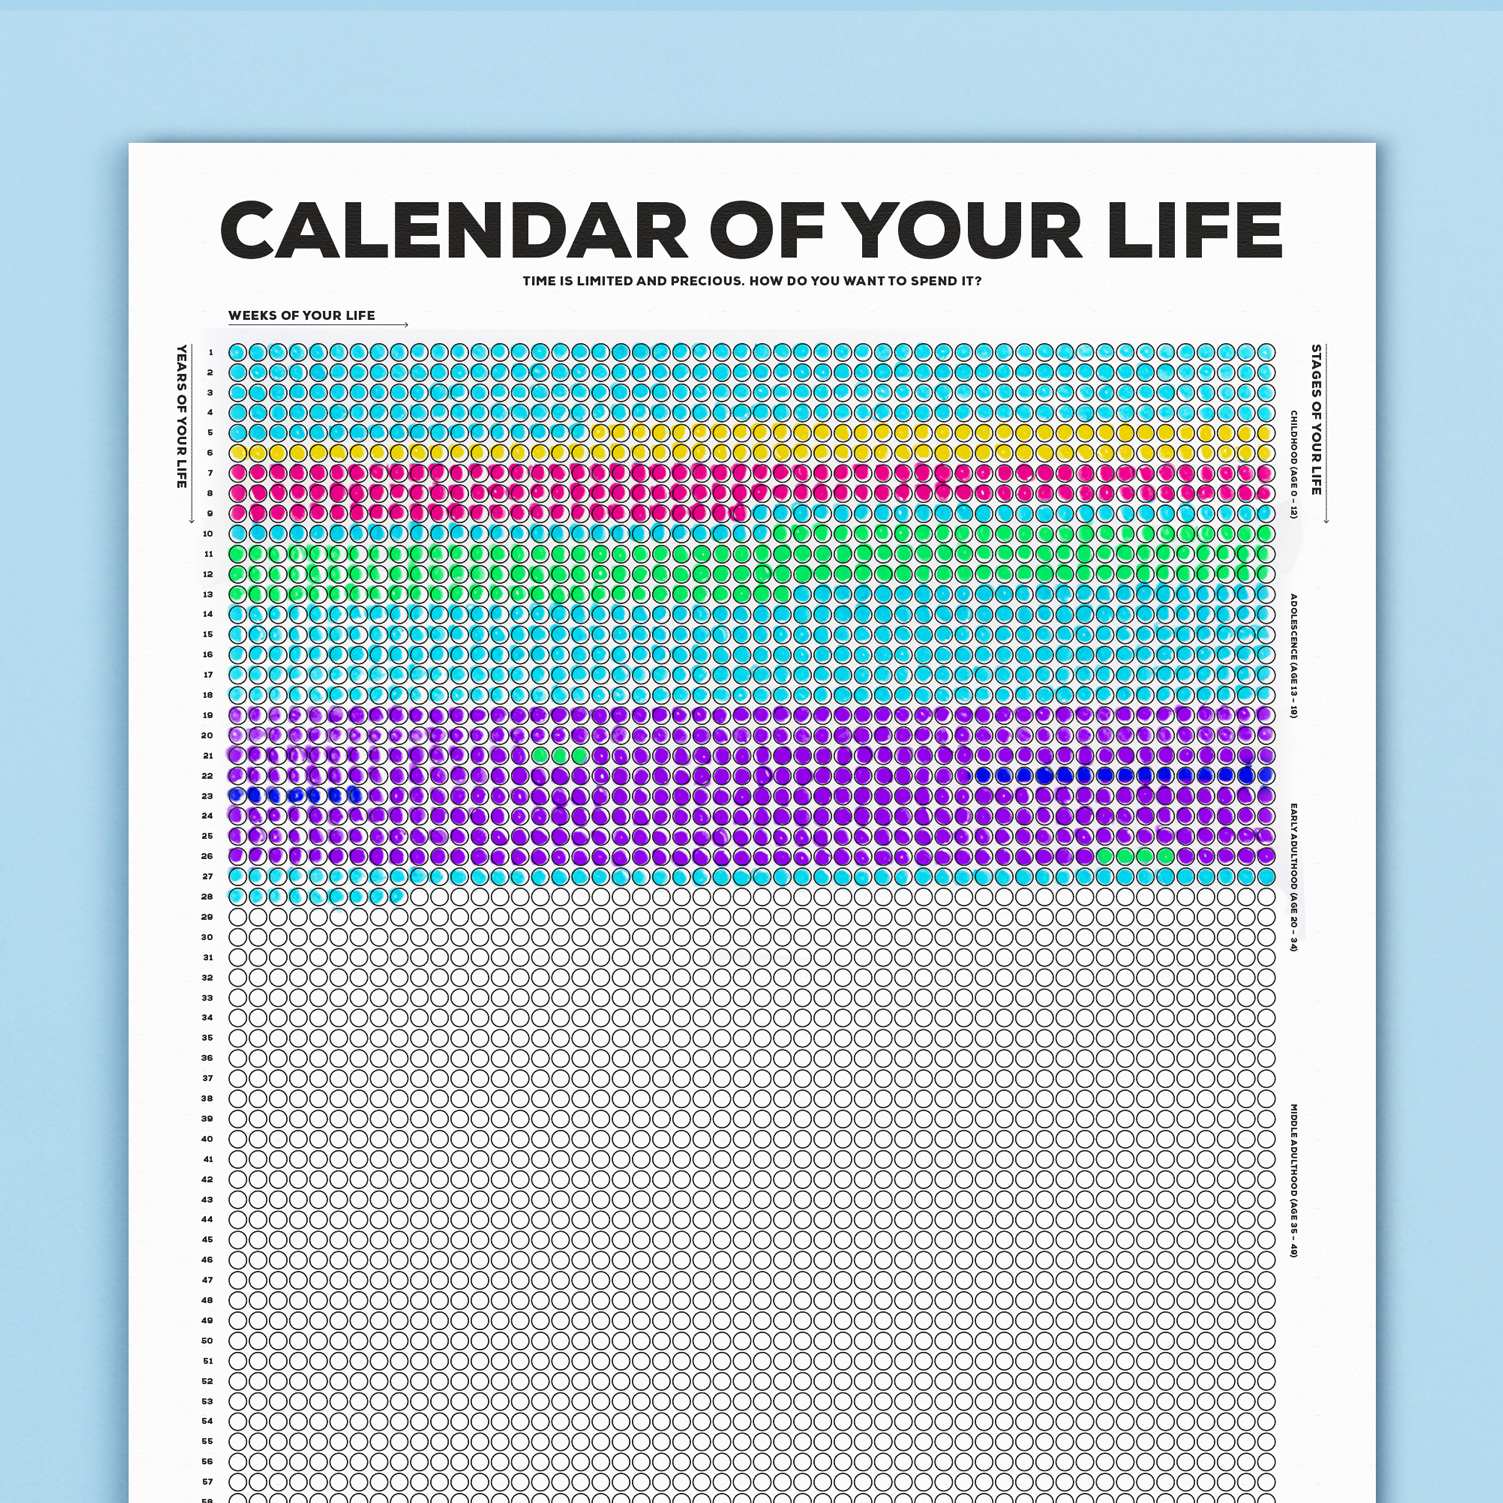 Calendar of Your Life Infographic Poster (B W) the kurzgesagt shop